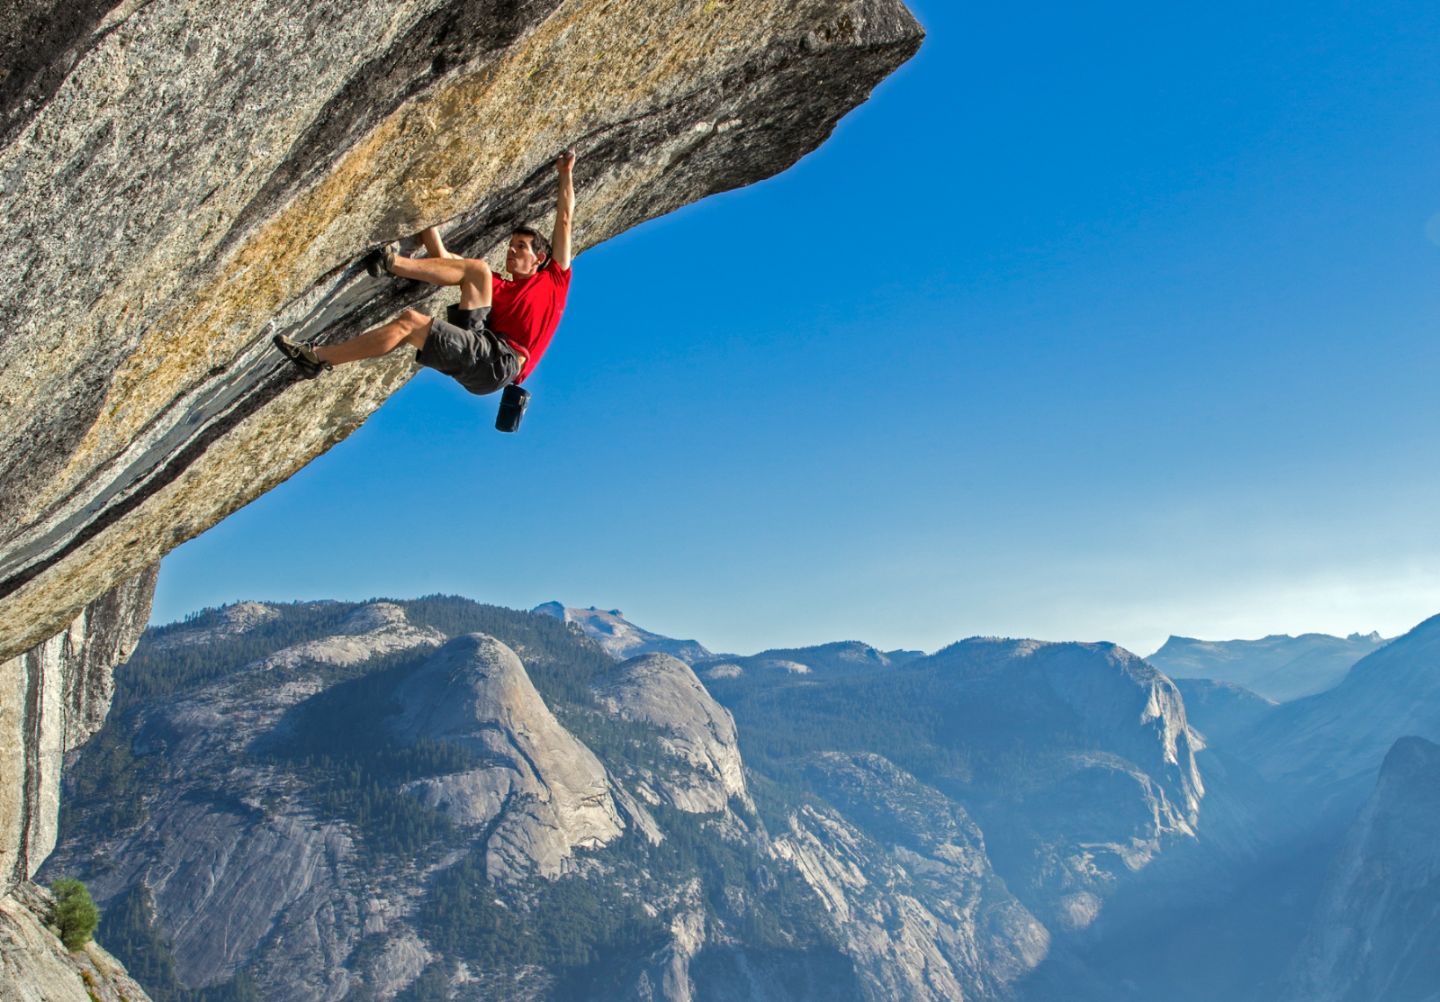 Alex Honnold free-climbing at Yosemite National Park